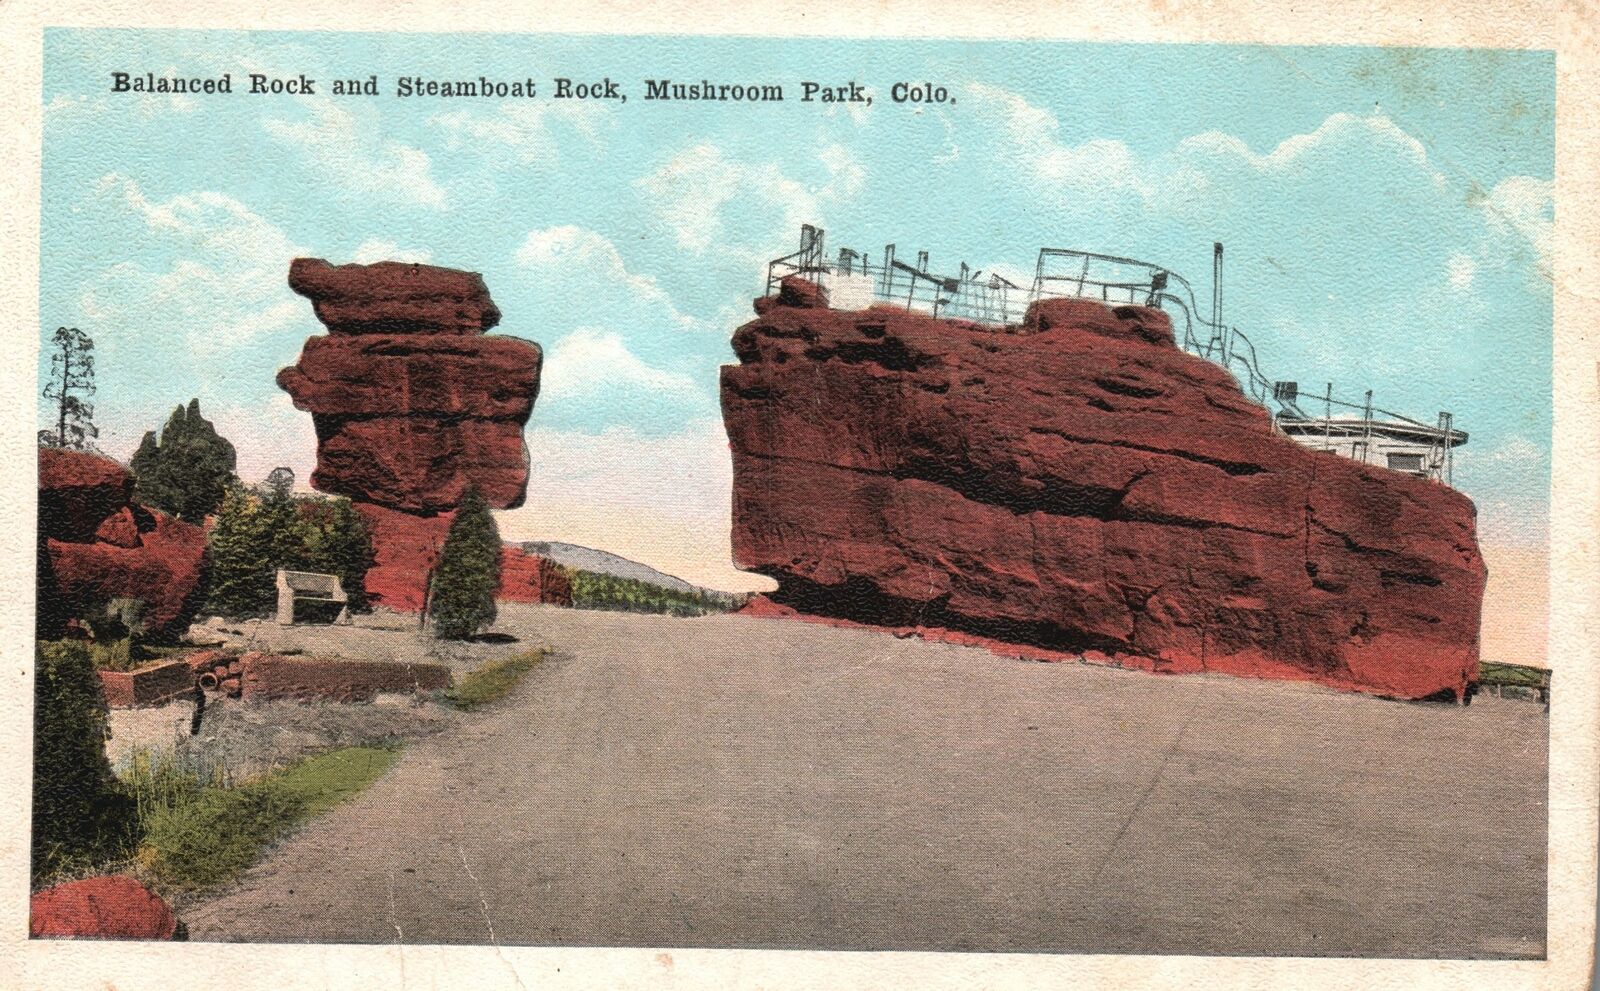 Mushroom Park Colorado, Balanced Rock and Steamboat Rock, Vintage Postcard